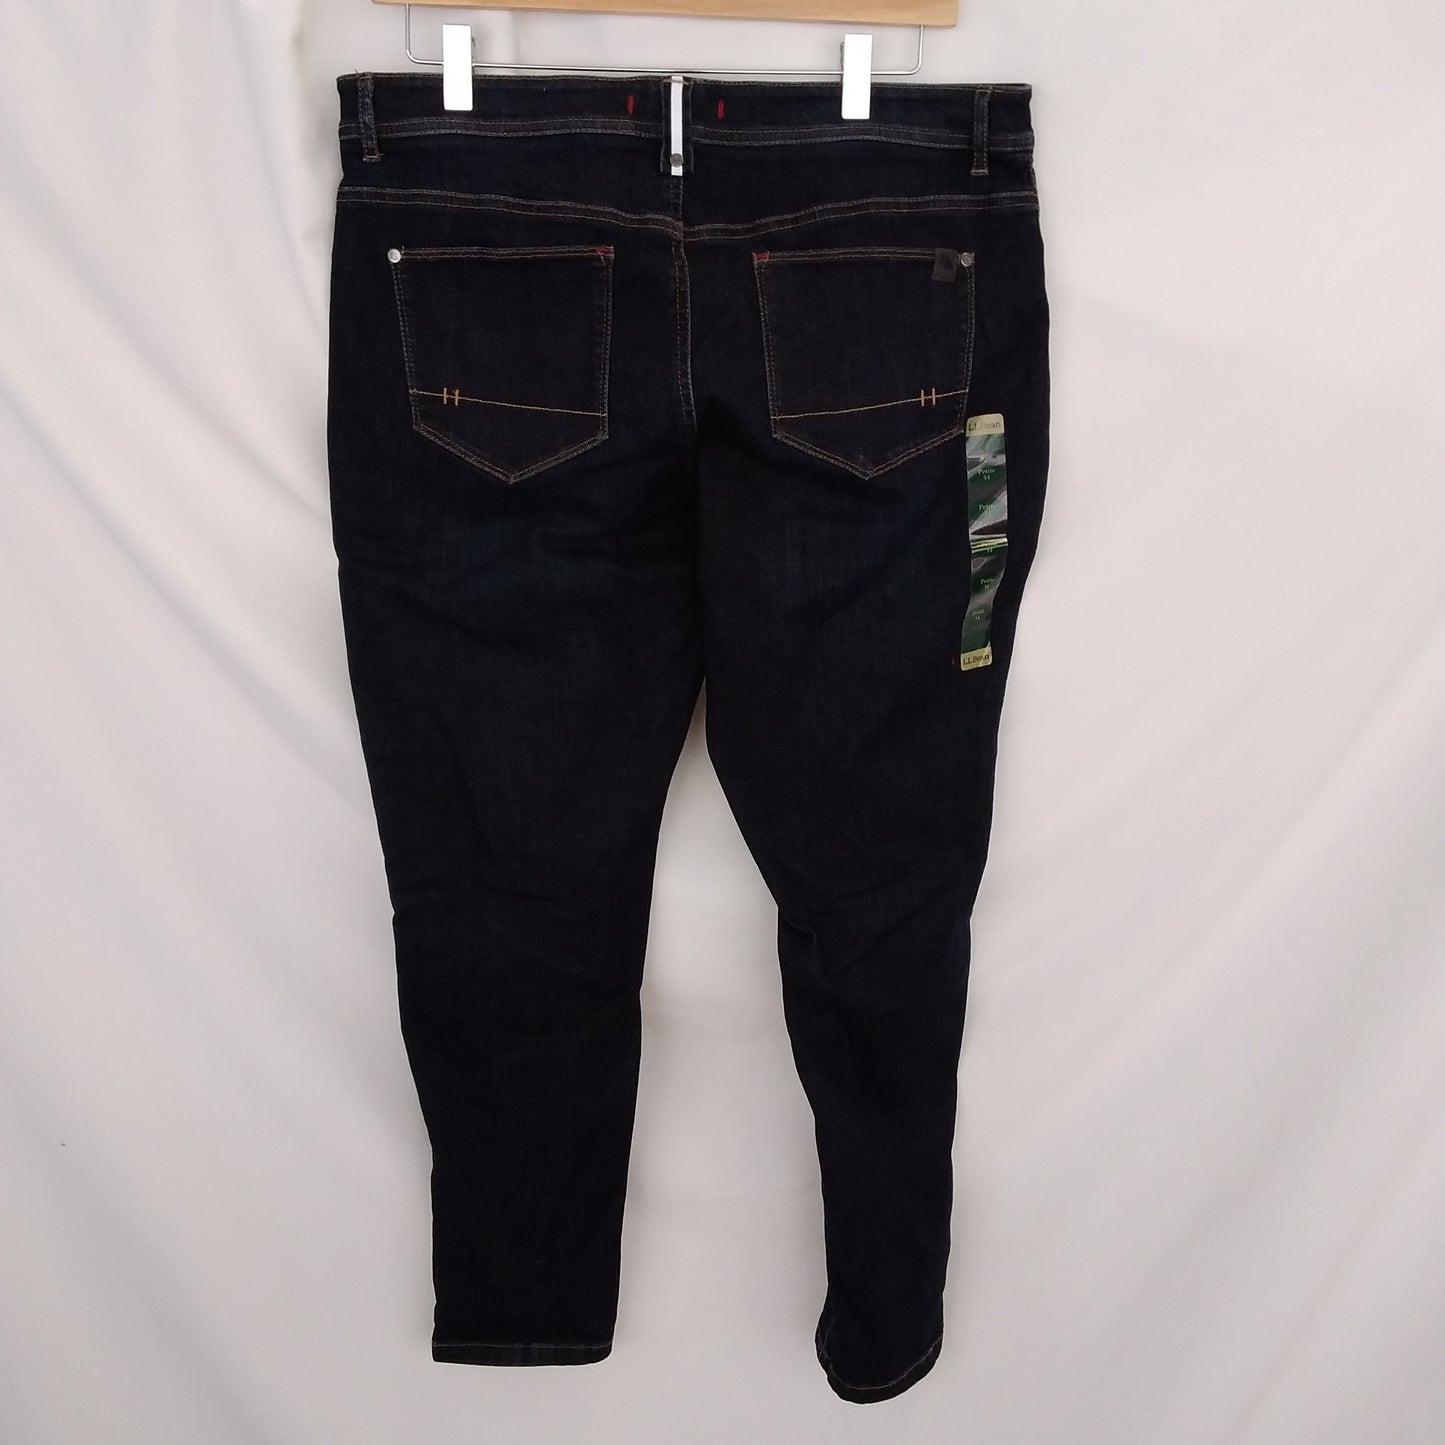 NWT - L.L. Bean Women's Stretch denim Jeans - Size 14 Petite